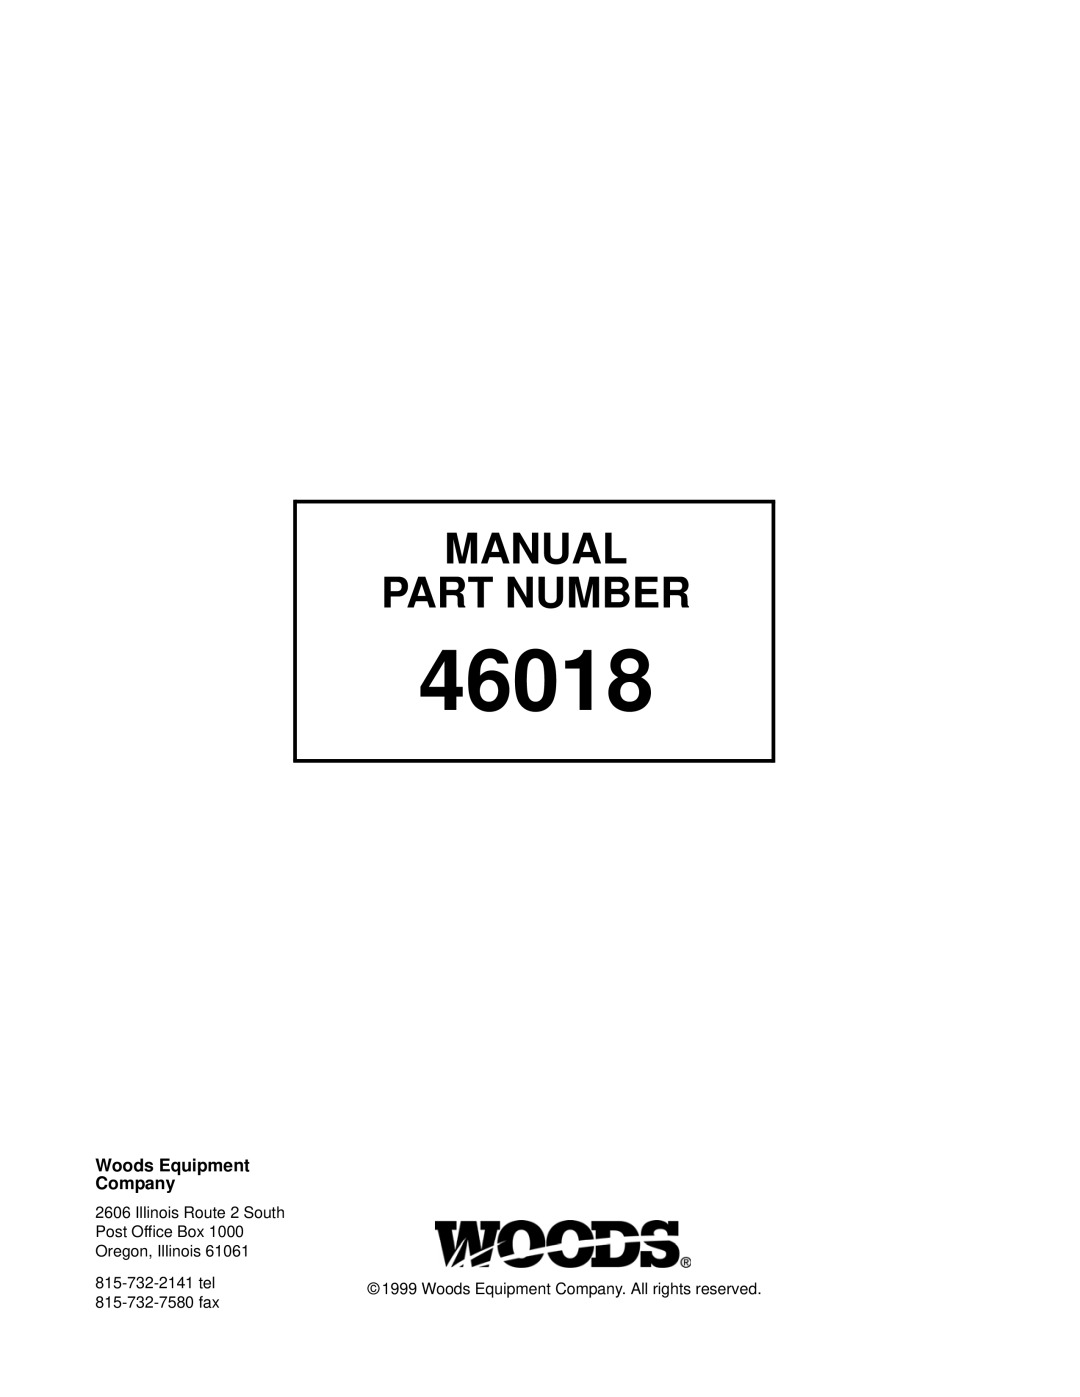 Woods Equipment M8200 manual Manual Part Number, 46018, Woods Equipment, Company 